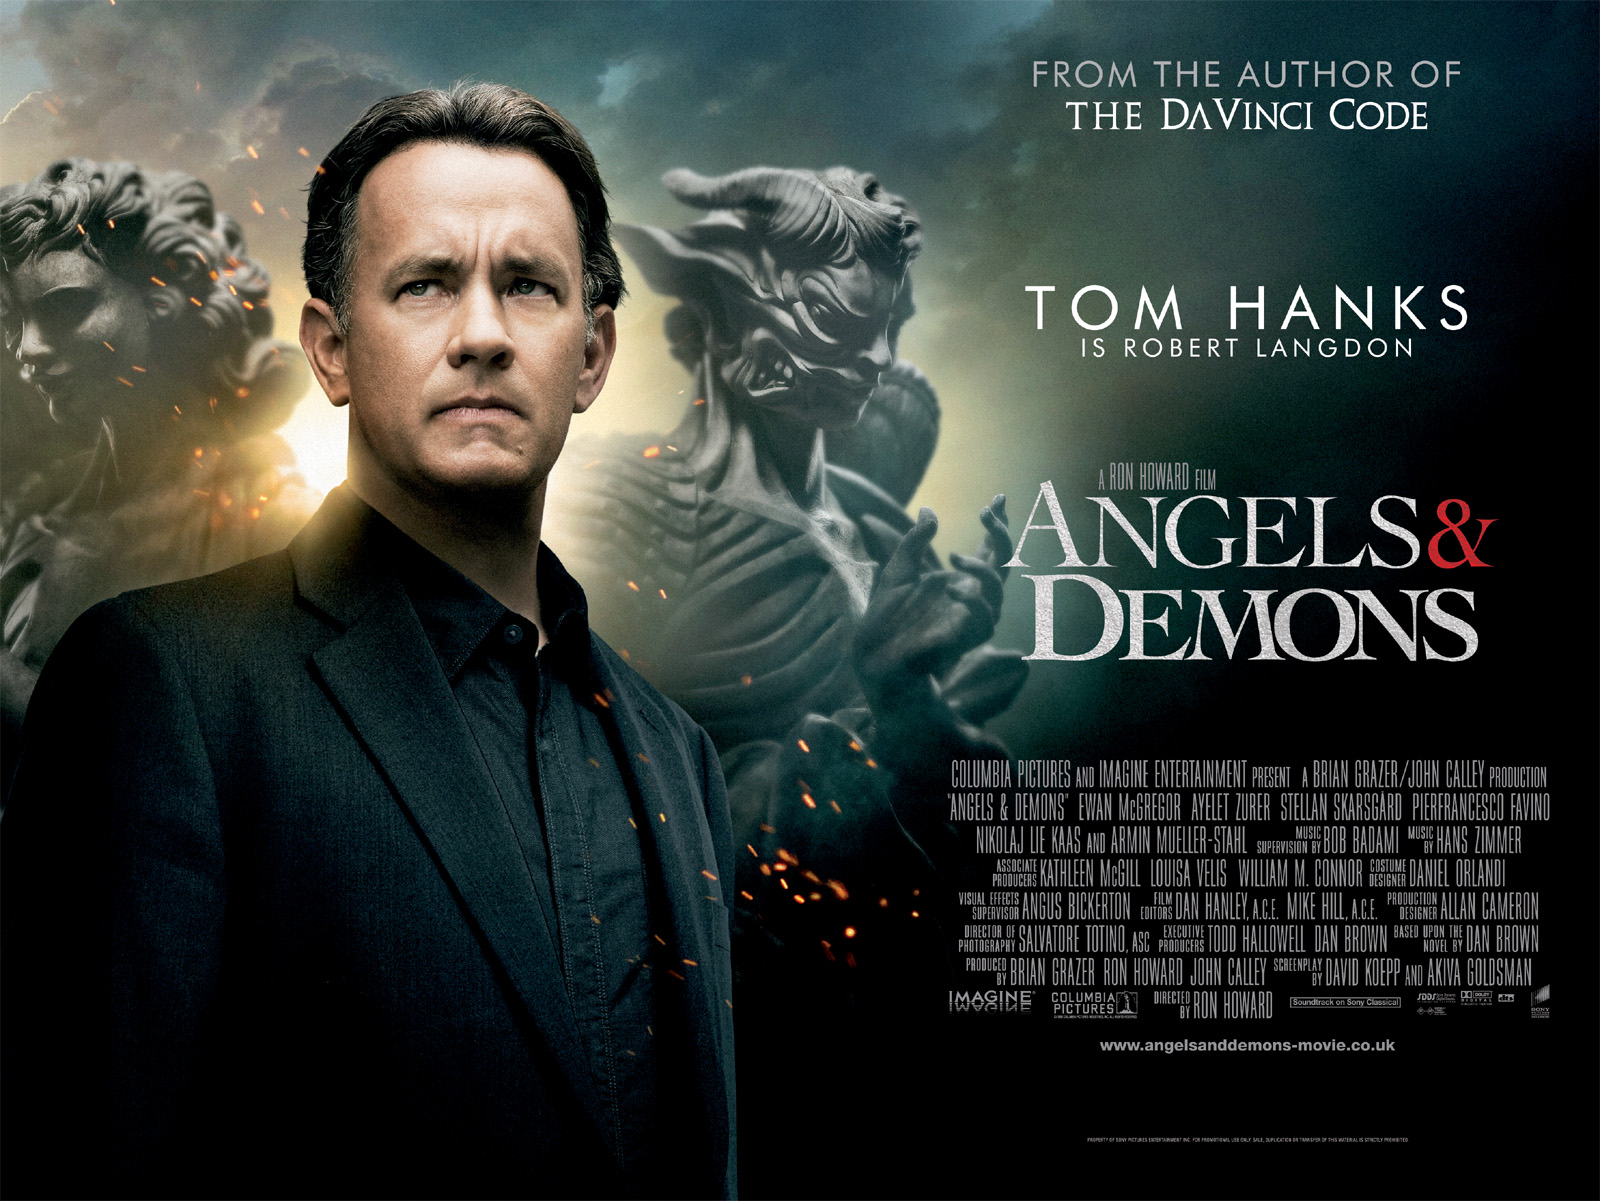 http://blog.films.ie/images/angels-demons-poster.jpg